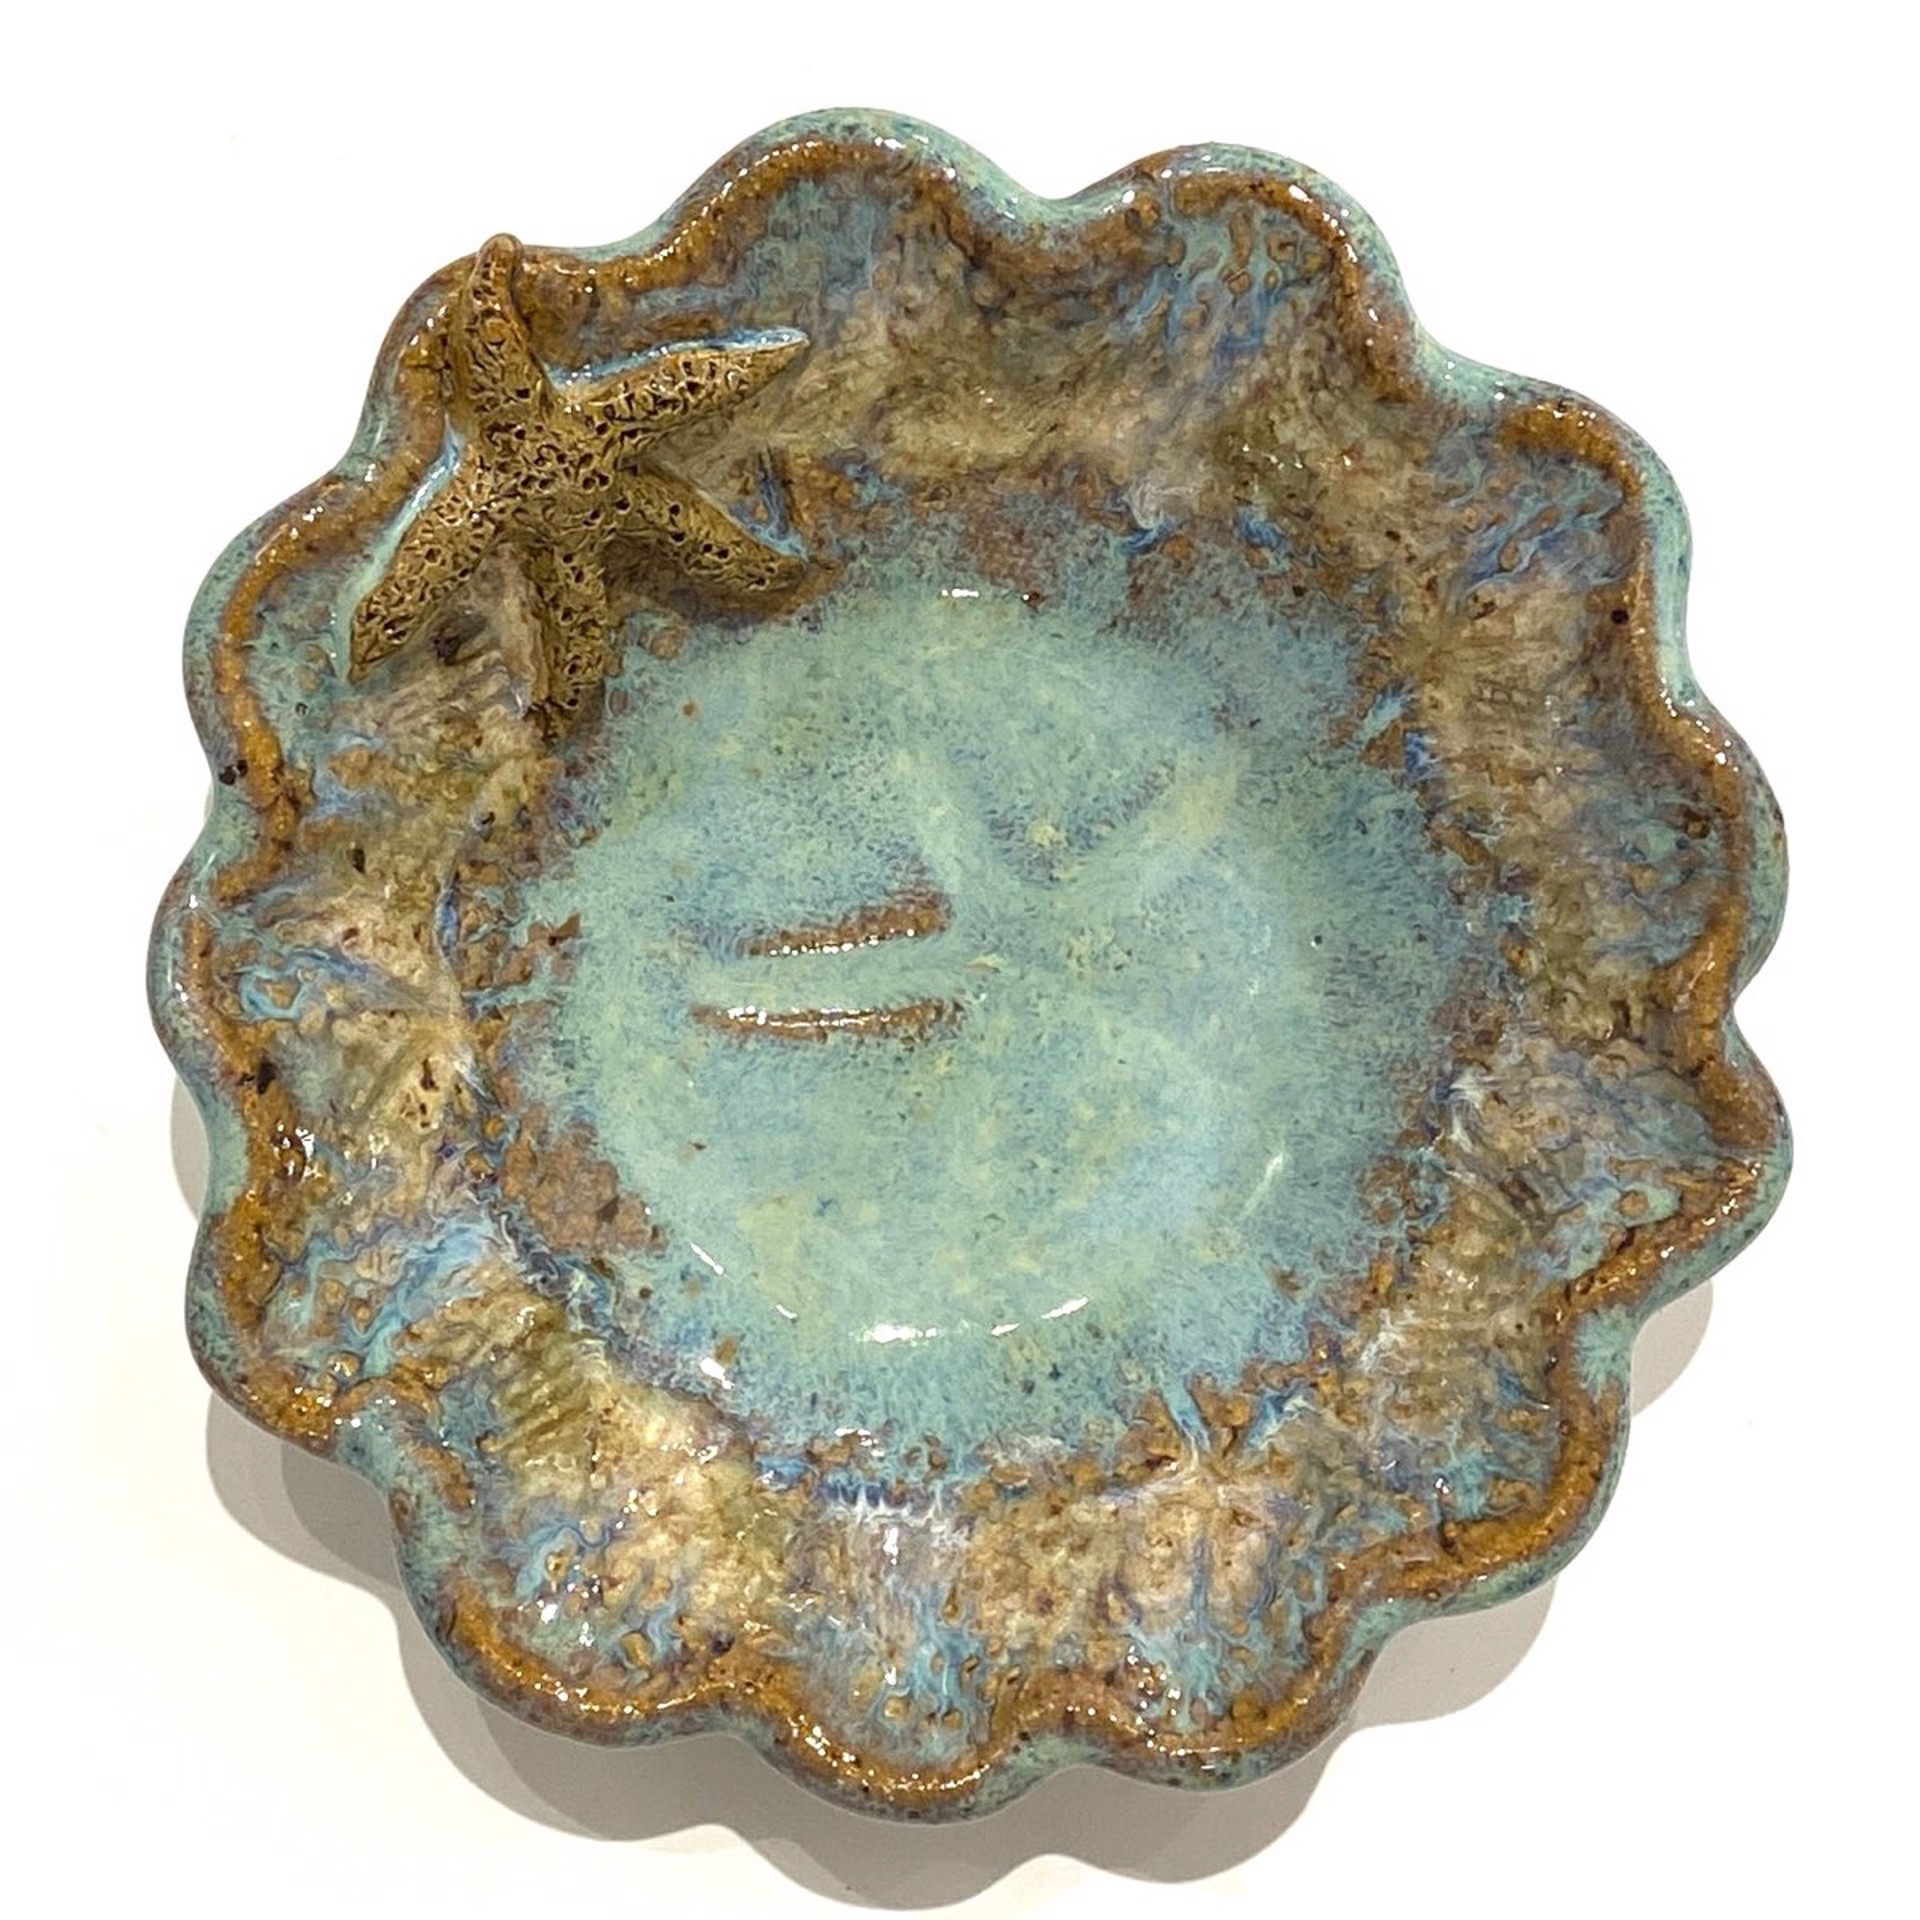 LG23-970 Mini Round Scalloped Bowl with Starfish (Green Glaze) by Jim & Steffi Logan